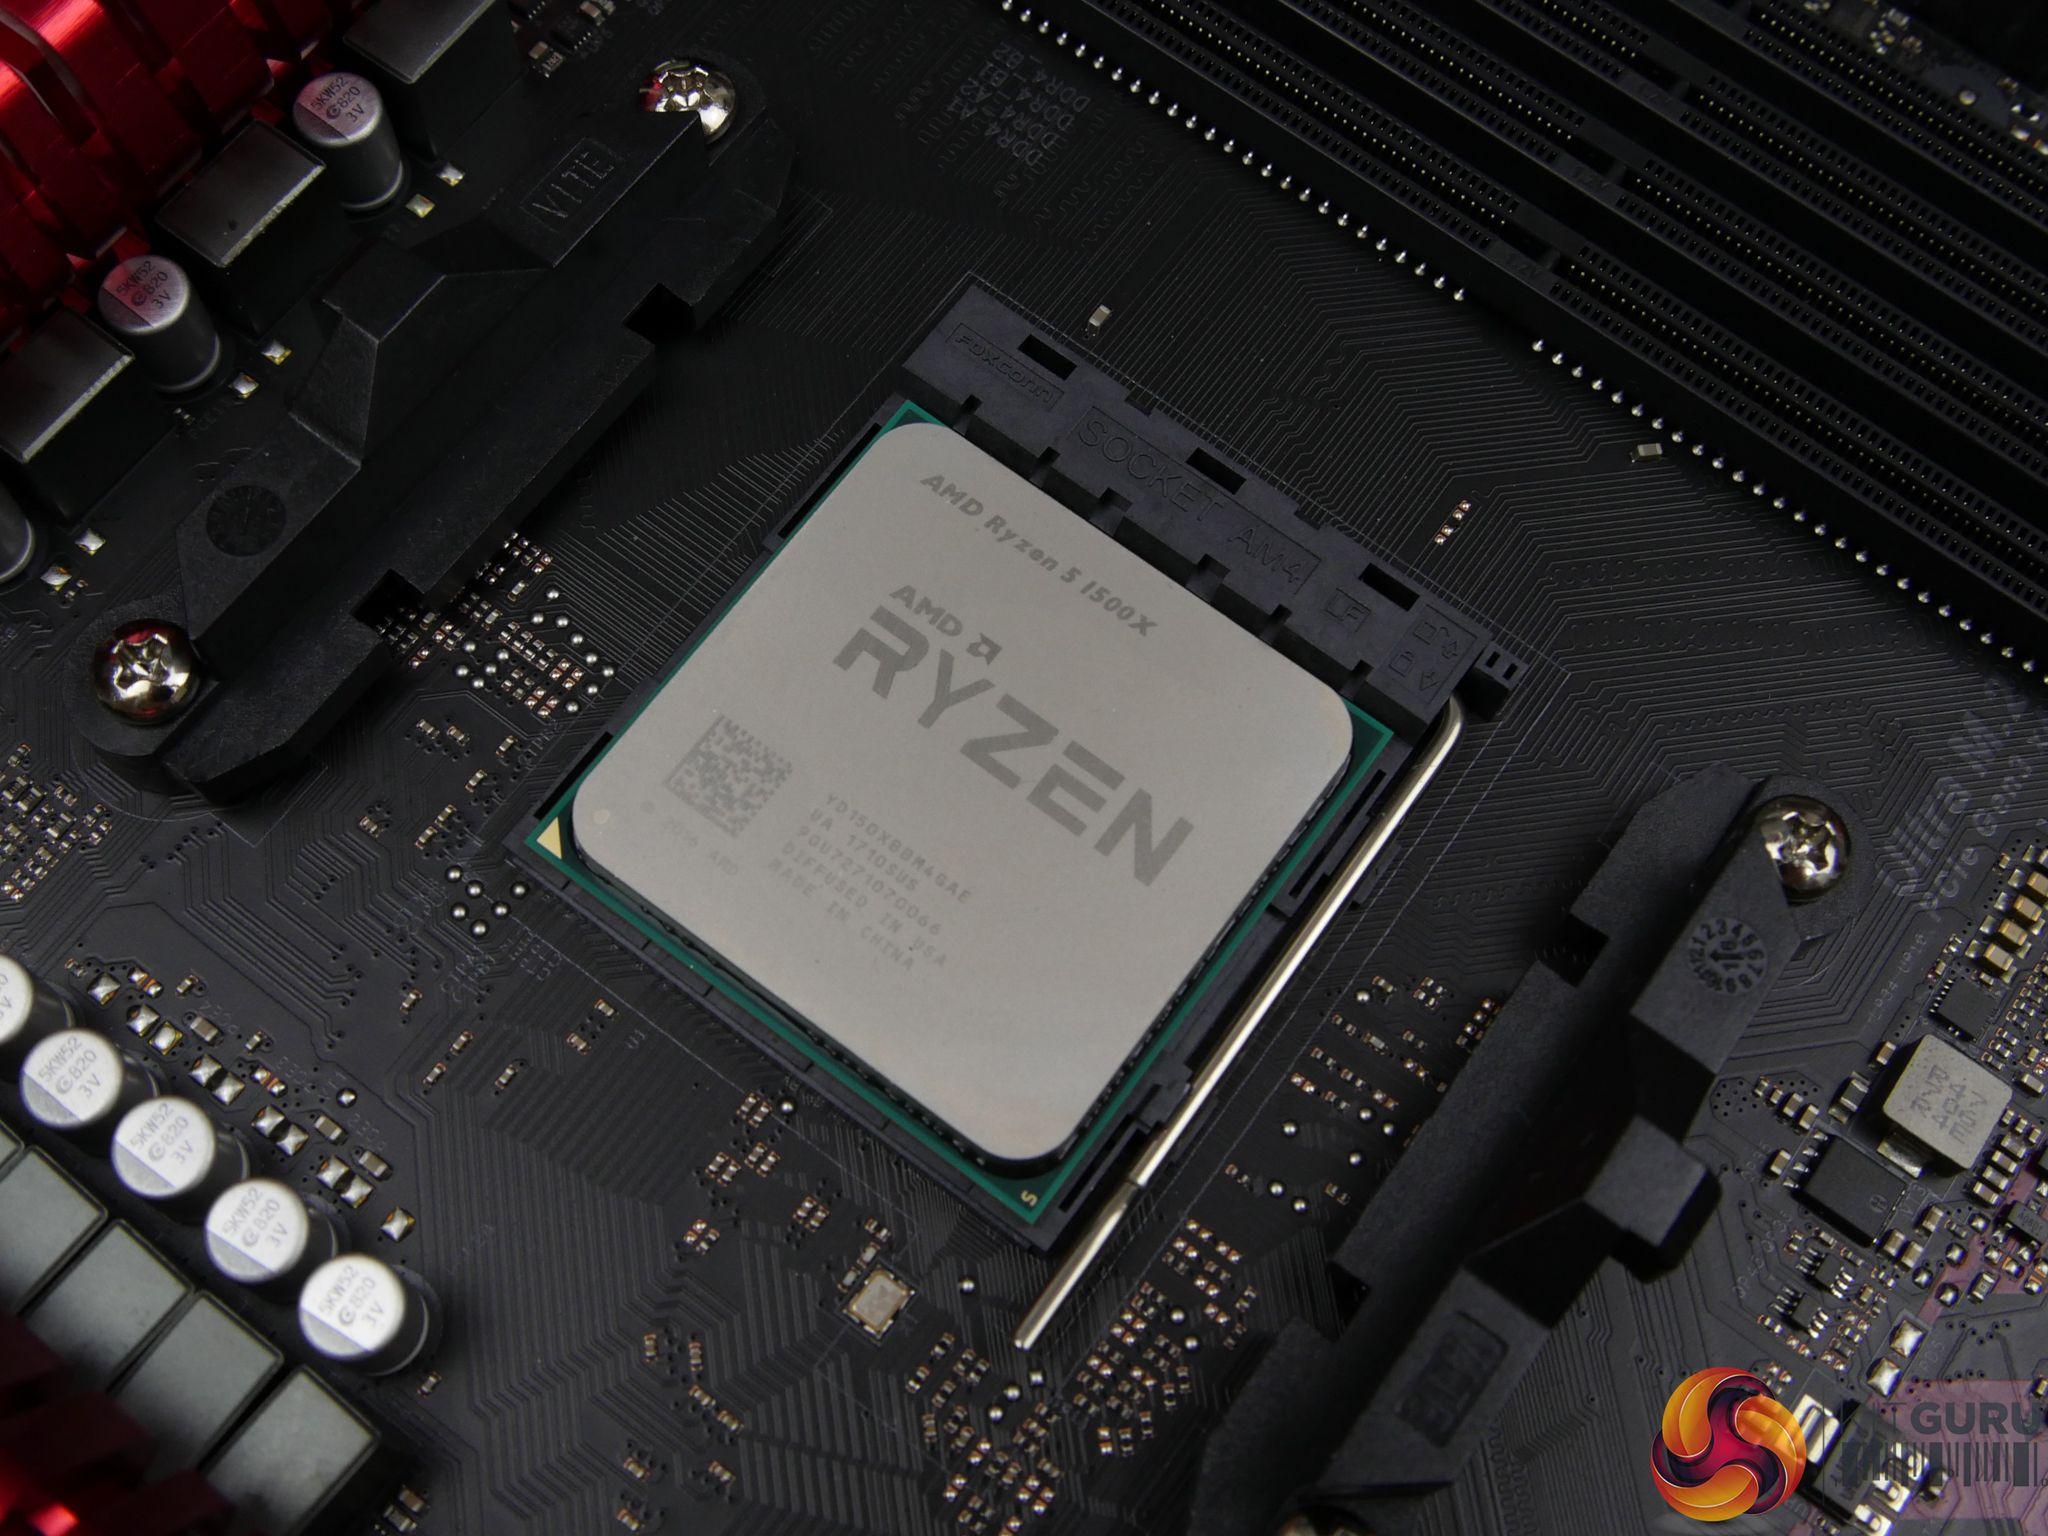 AMD Ryzen 5 1500X (4C8T) CPU Review